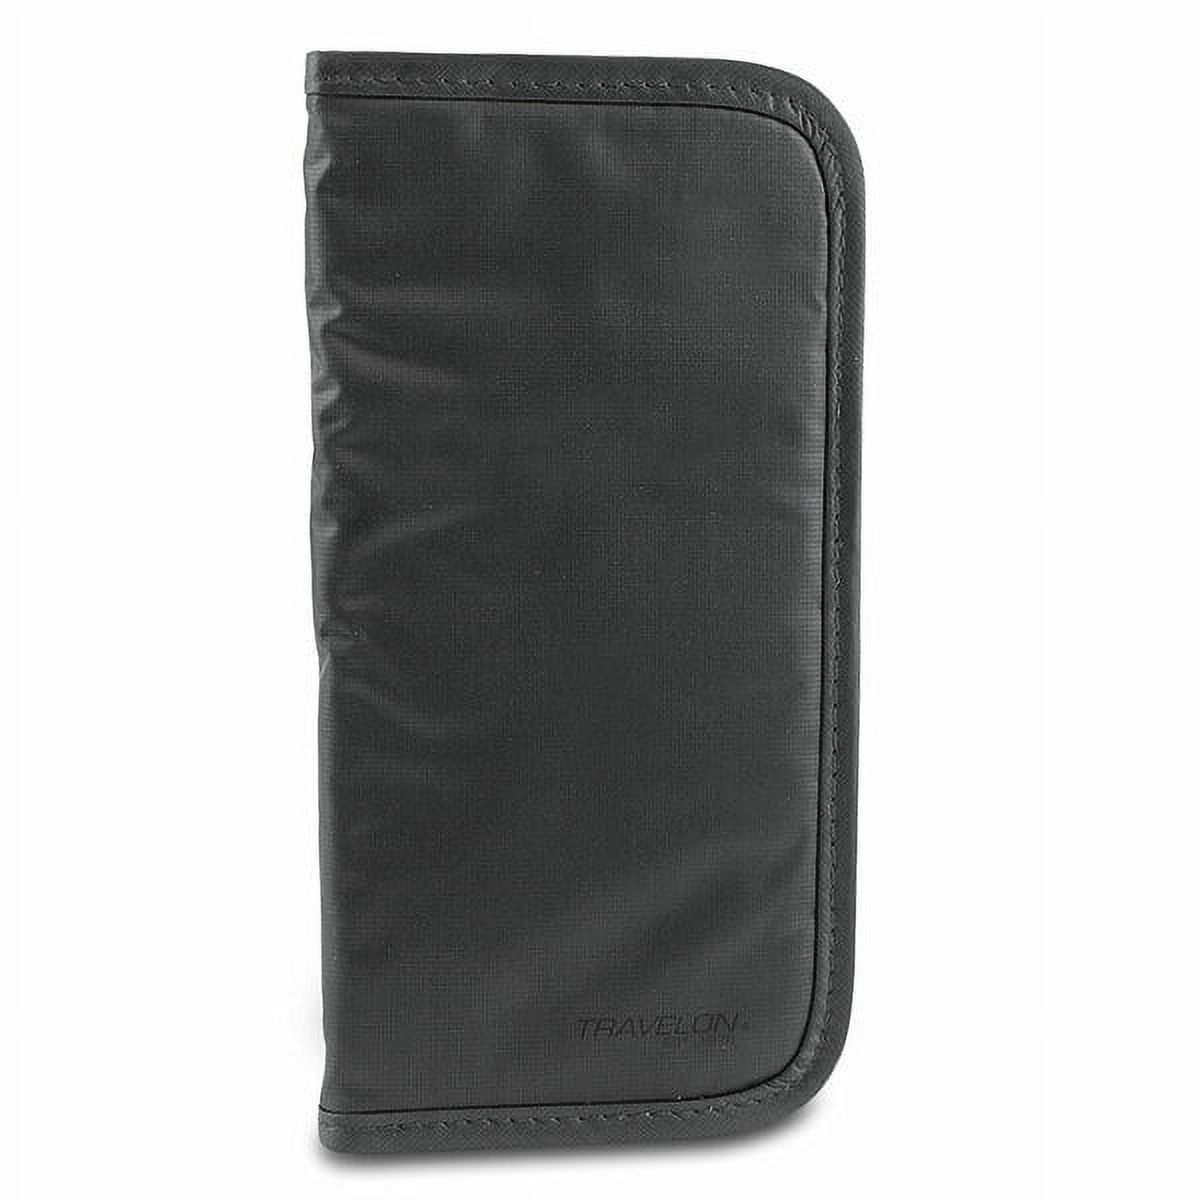 Travelon Luggage Safe ID Checkbook Wallet (Black) - image 1 of 4